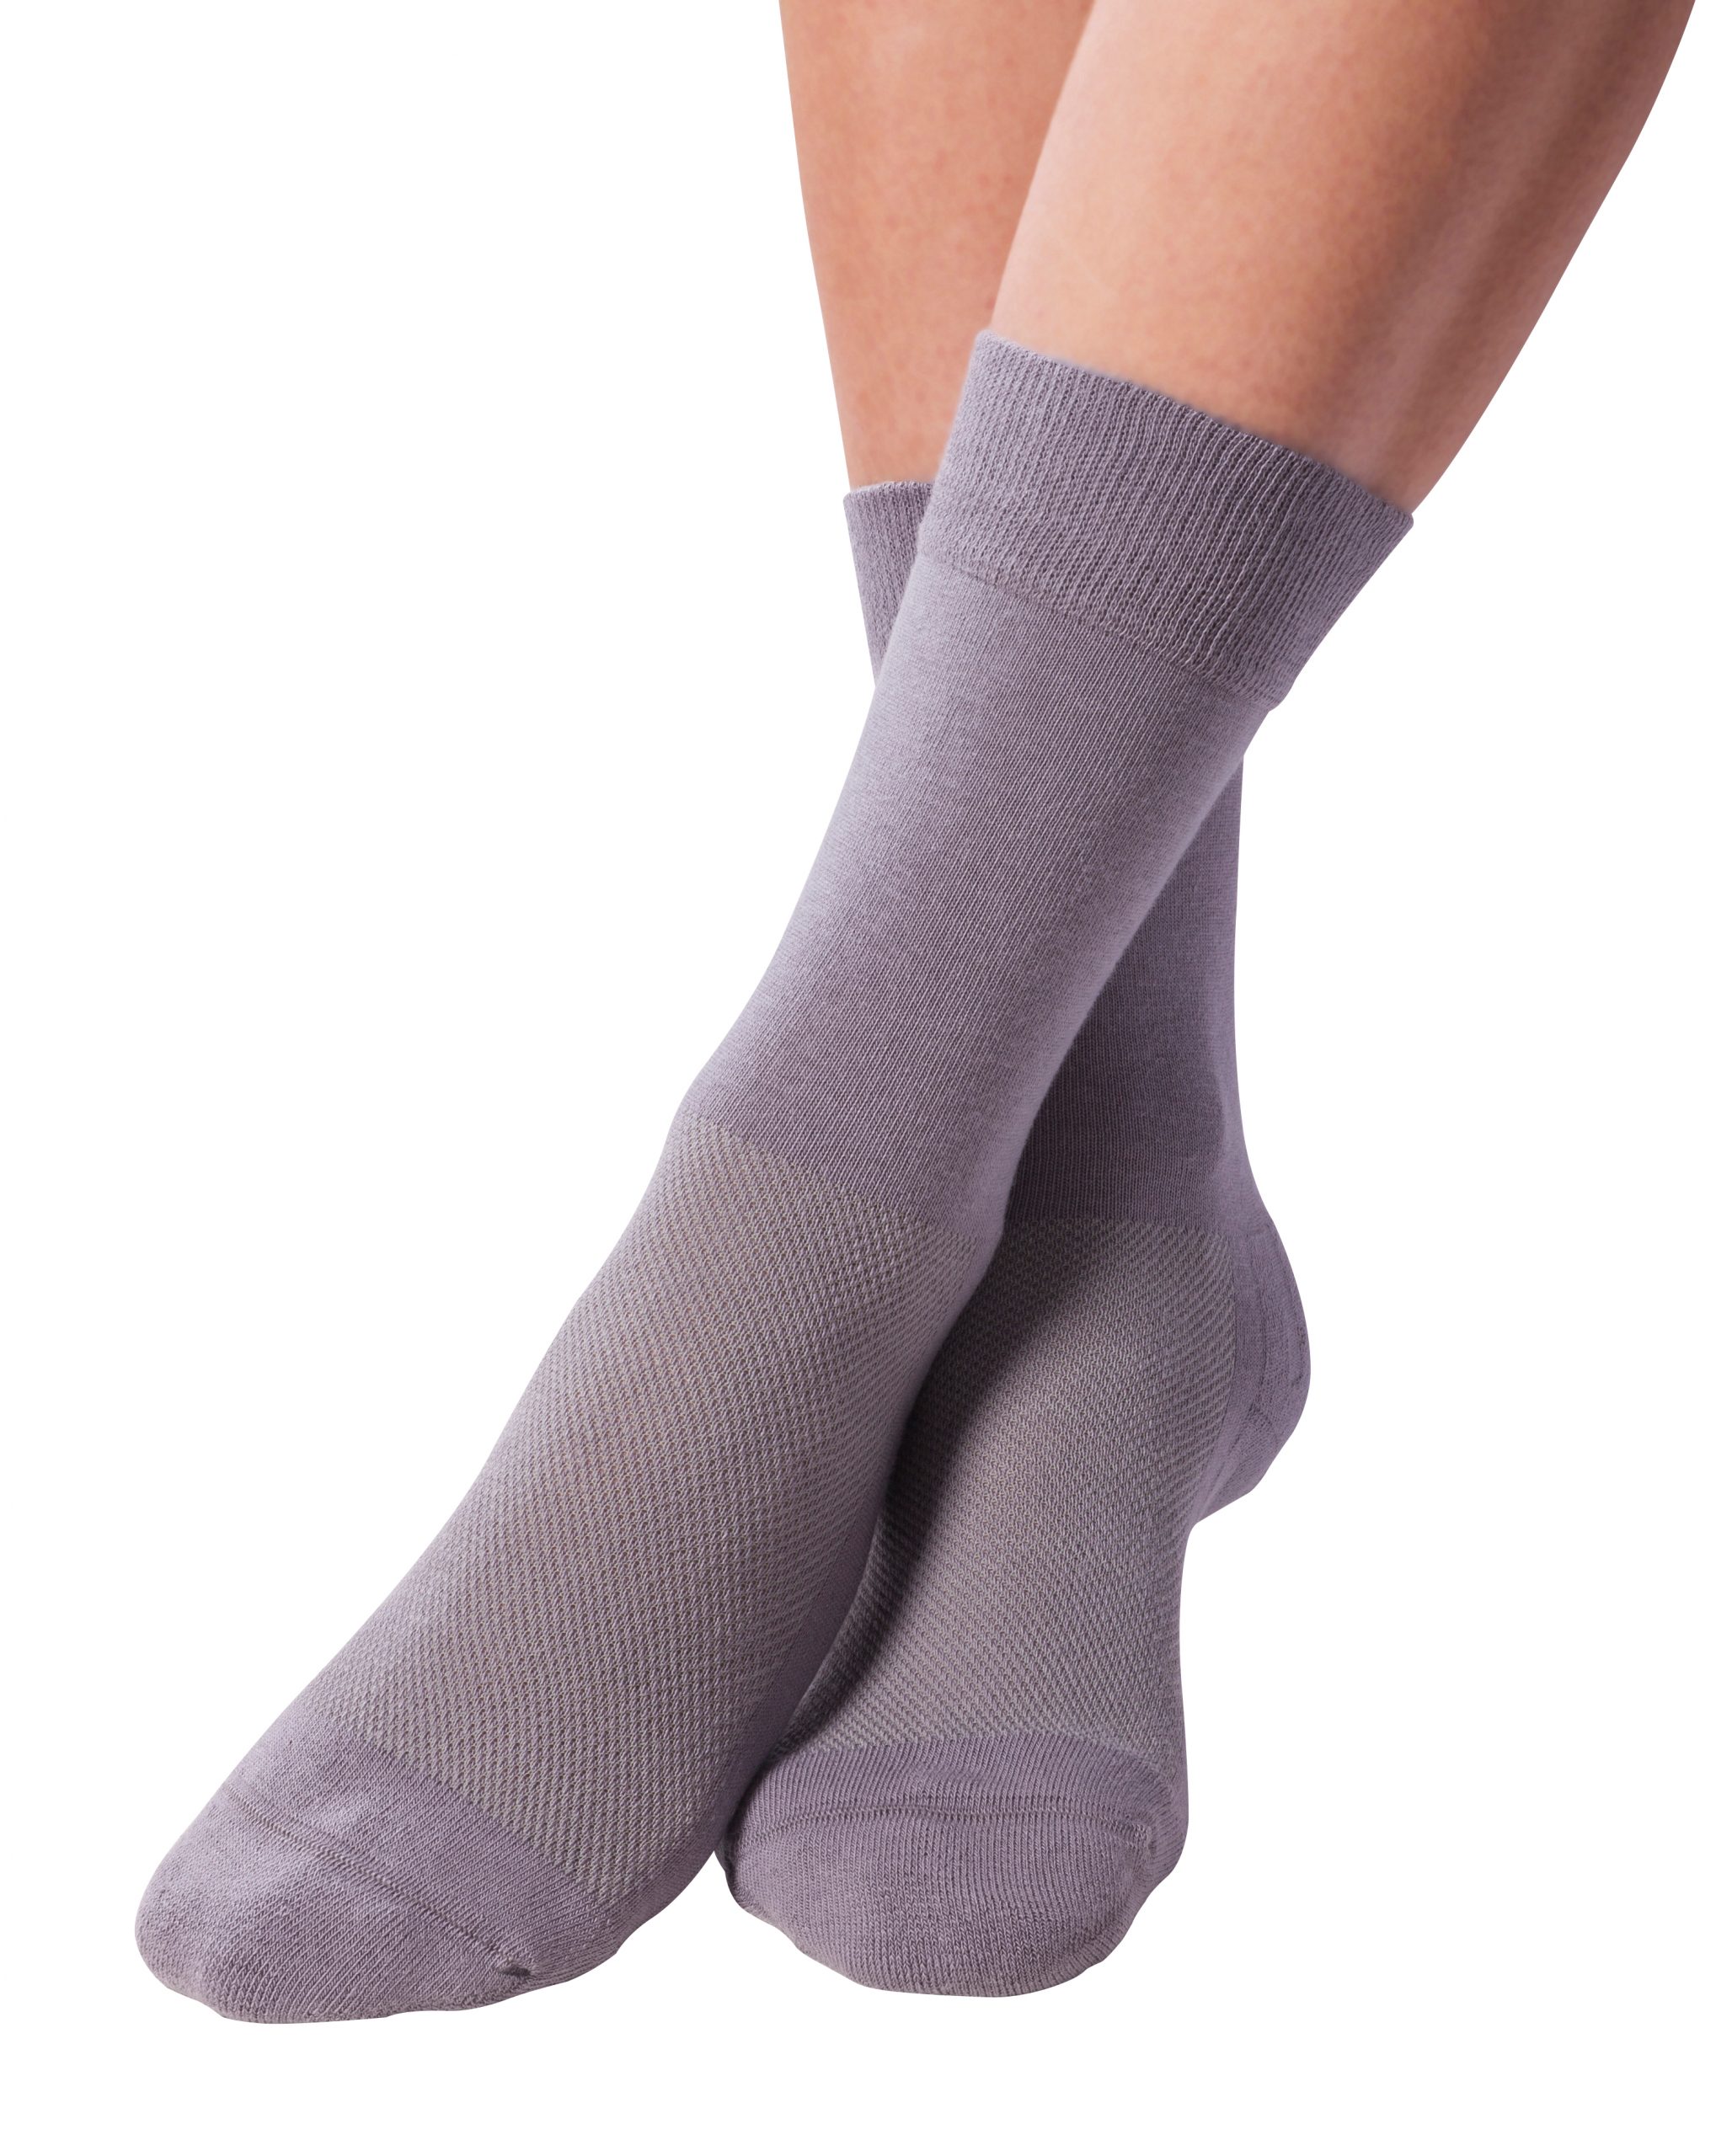 Fußgut sensitiv Socken Venenfreund TS5853-2 –